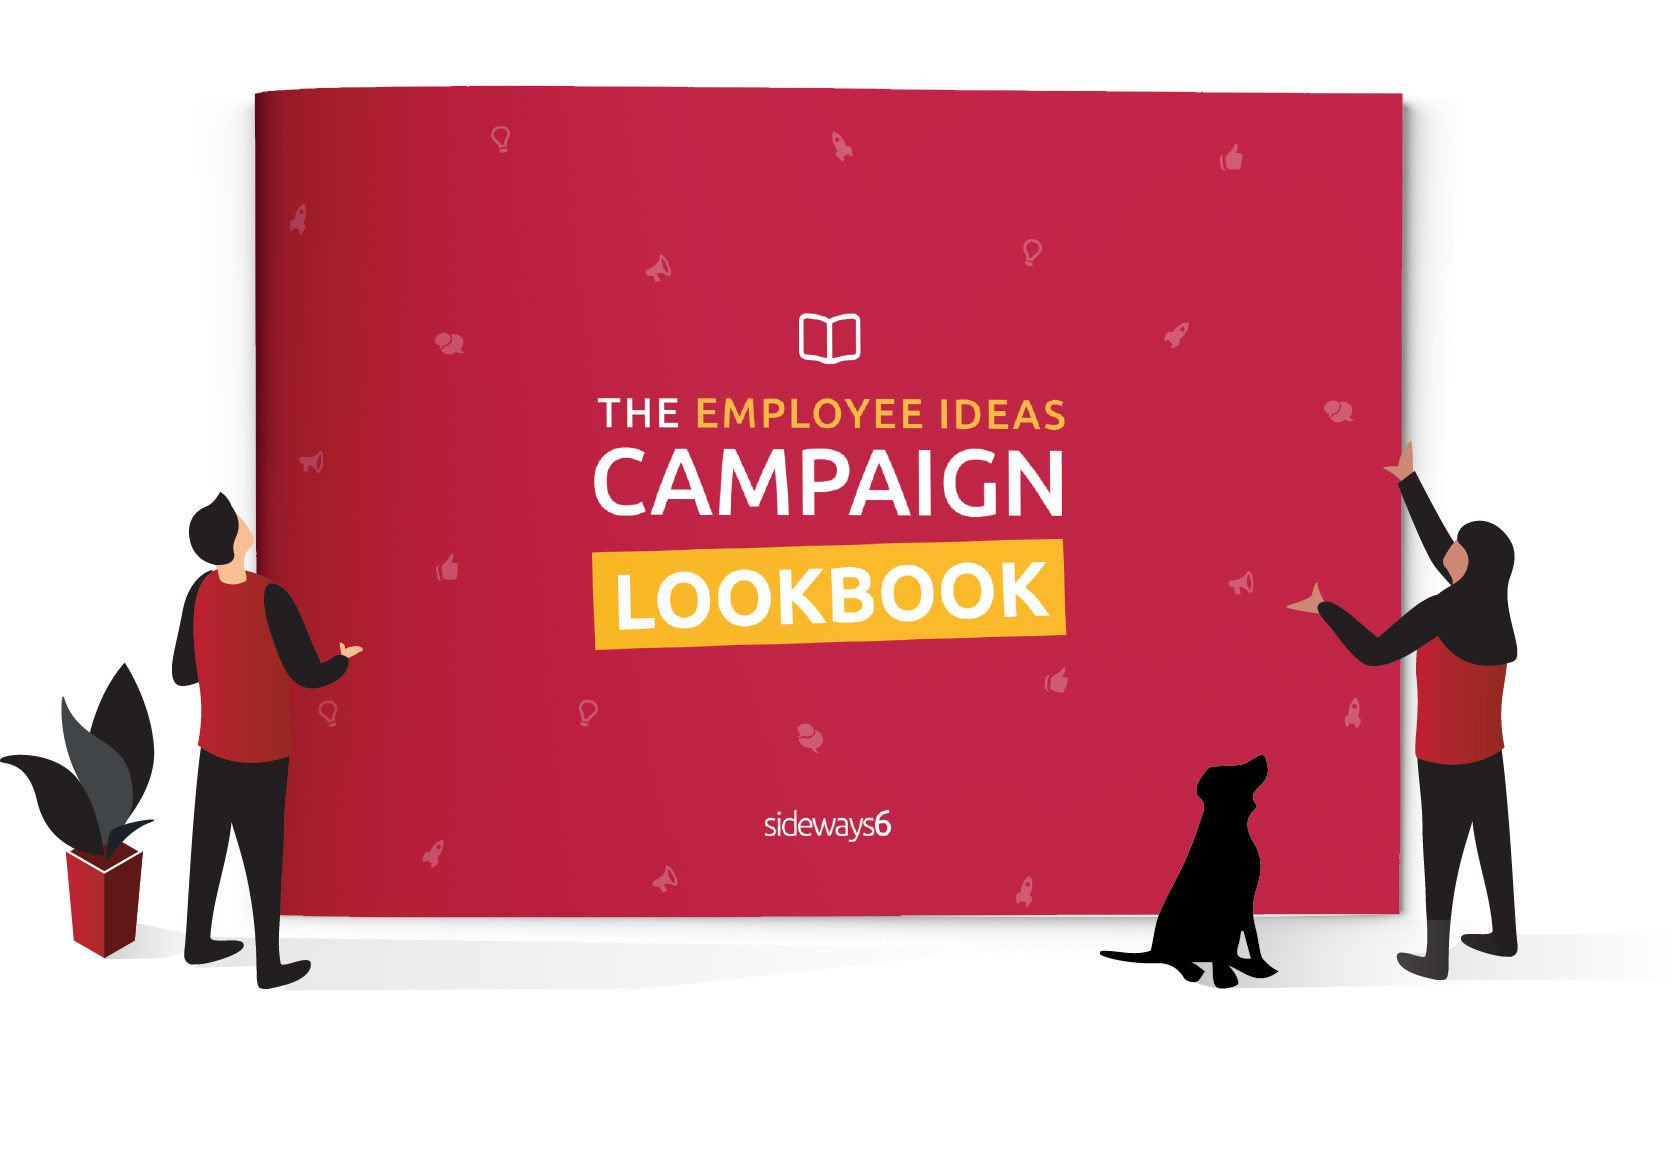 The Employee Ideas Campaign Lookbook